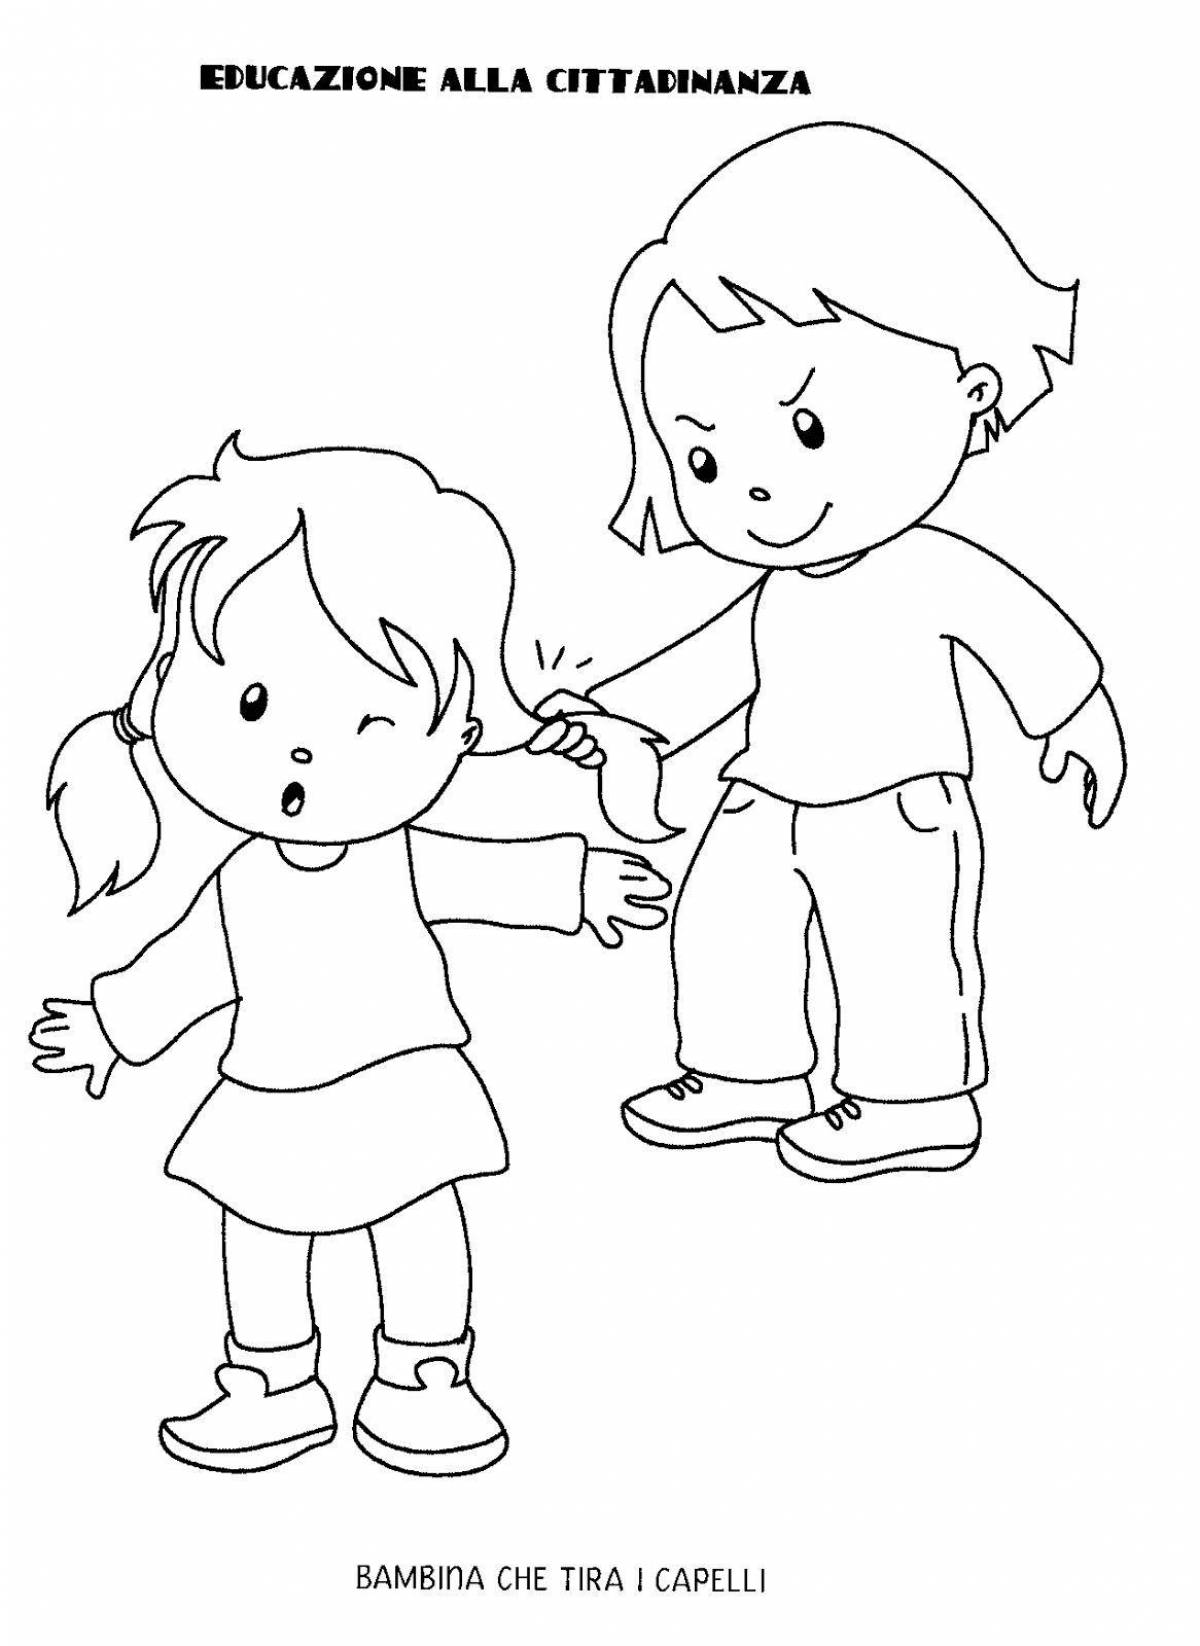 Adorable etiquette coloring book for preschoolers